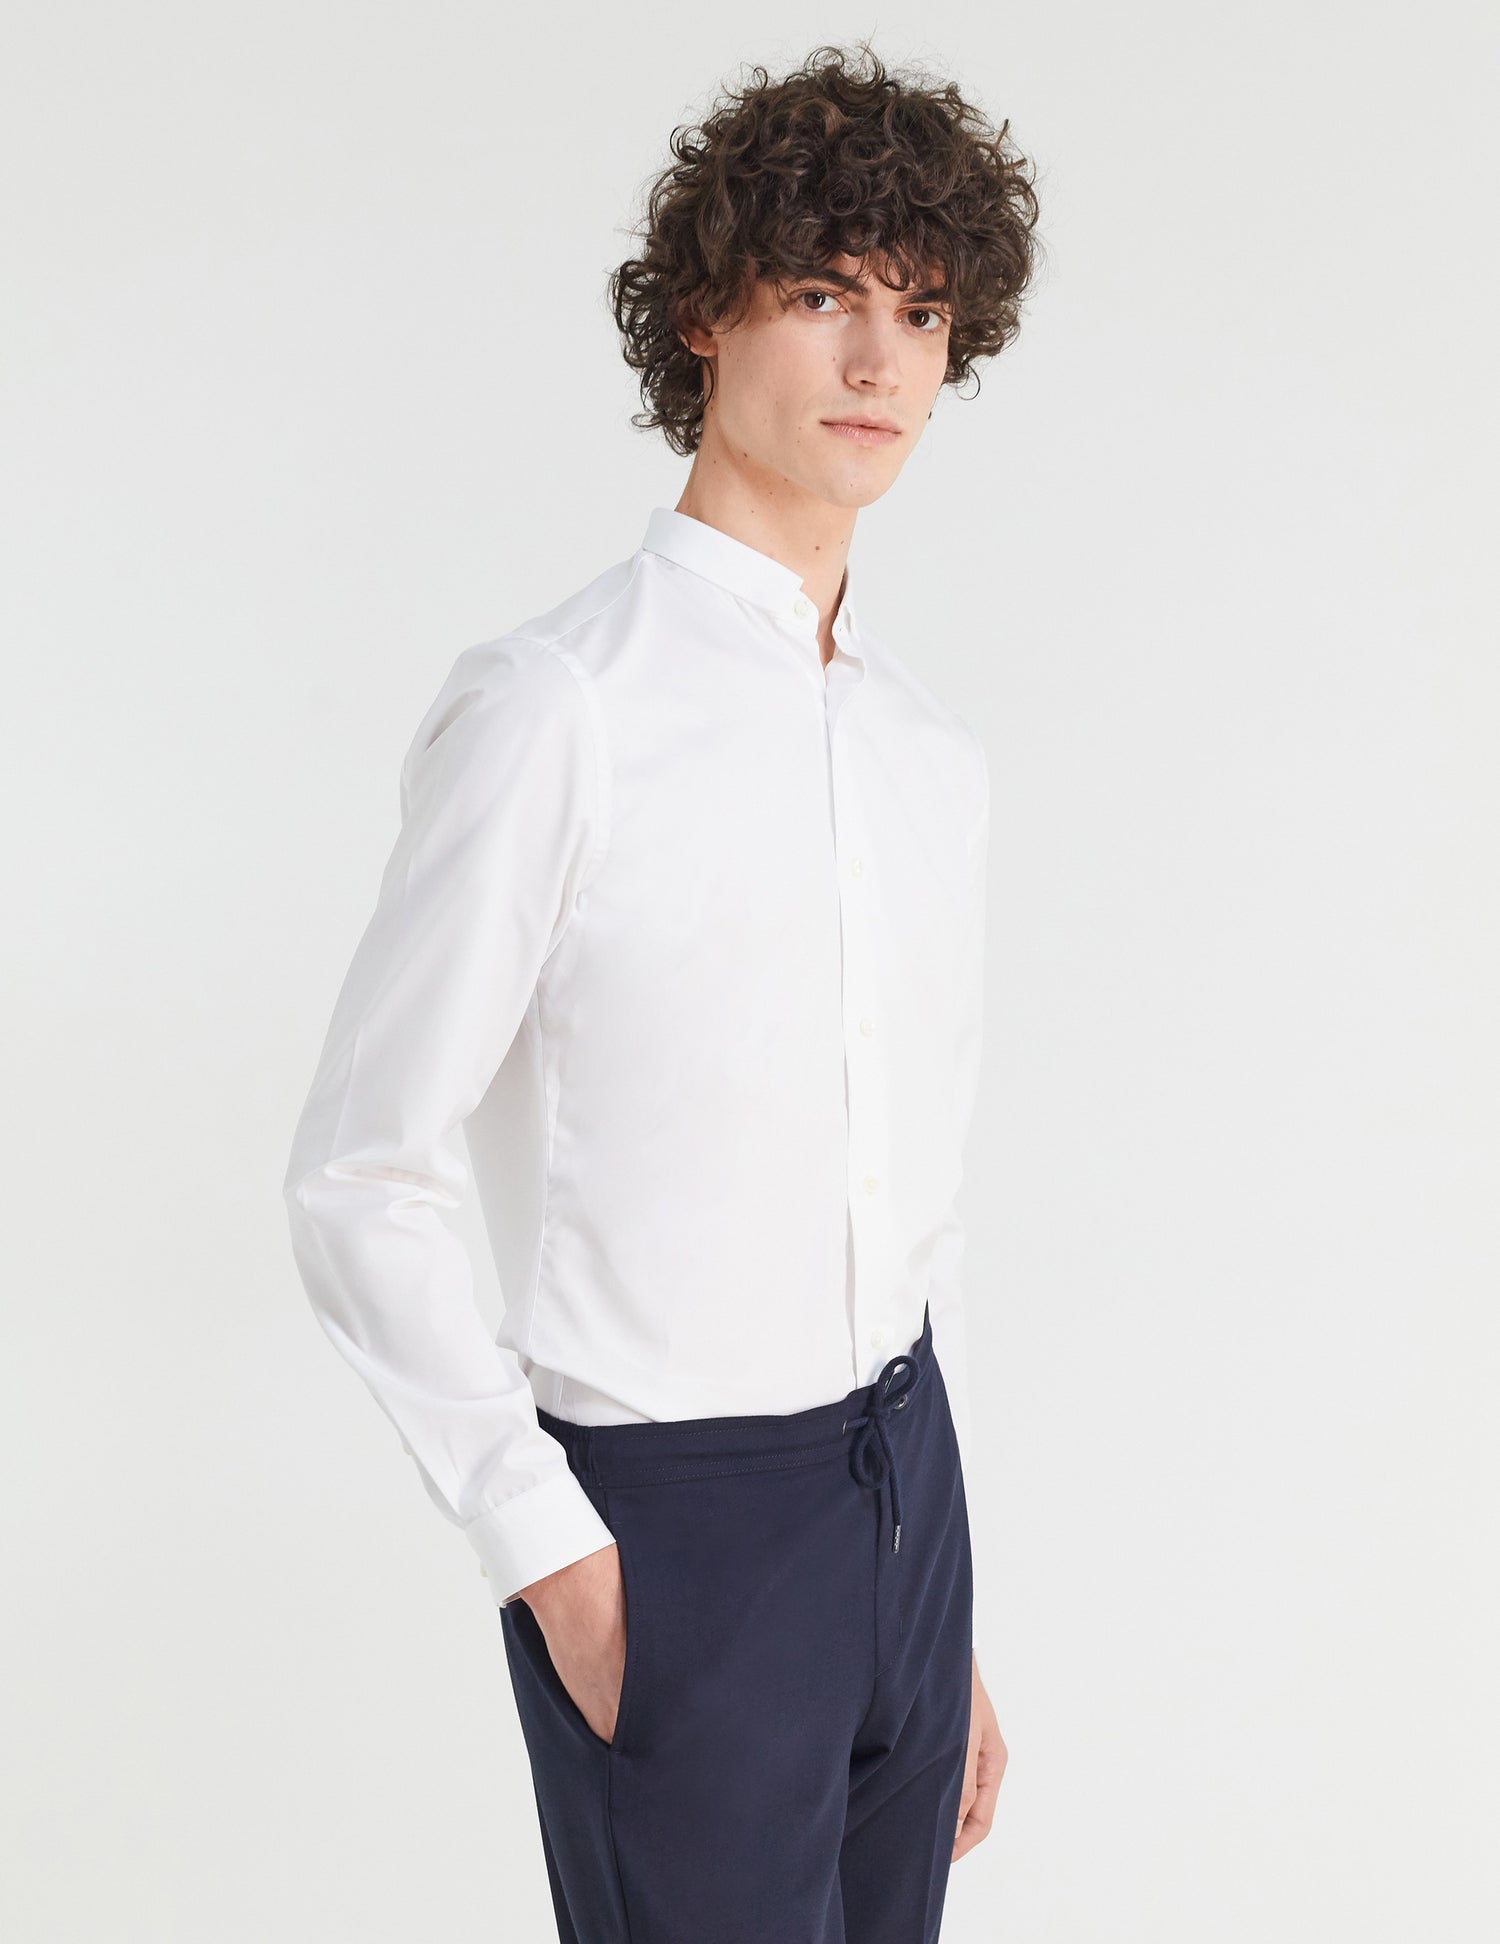 Fitted white shirt - Poplin - Sewn Collar#3